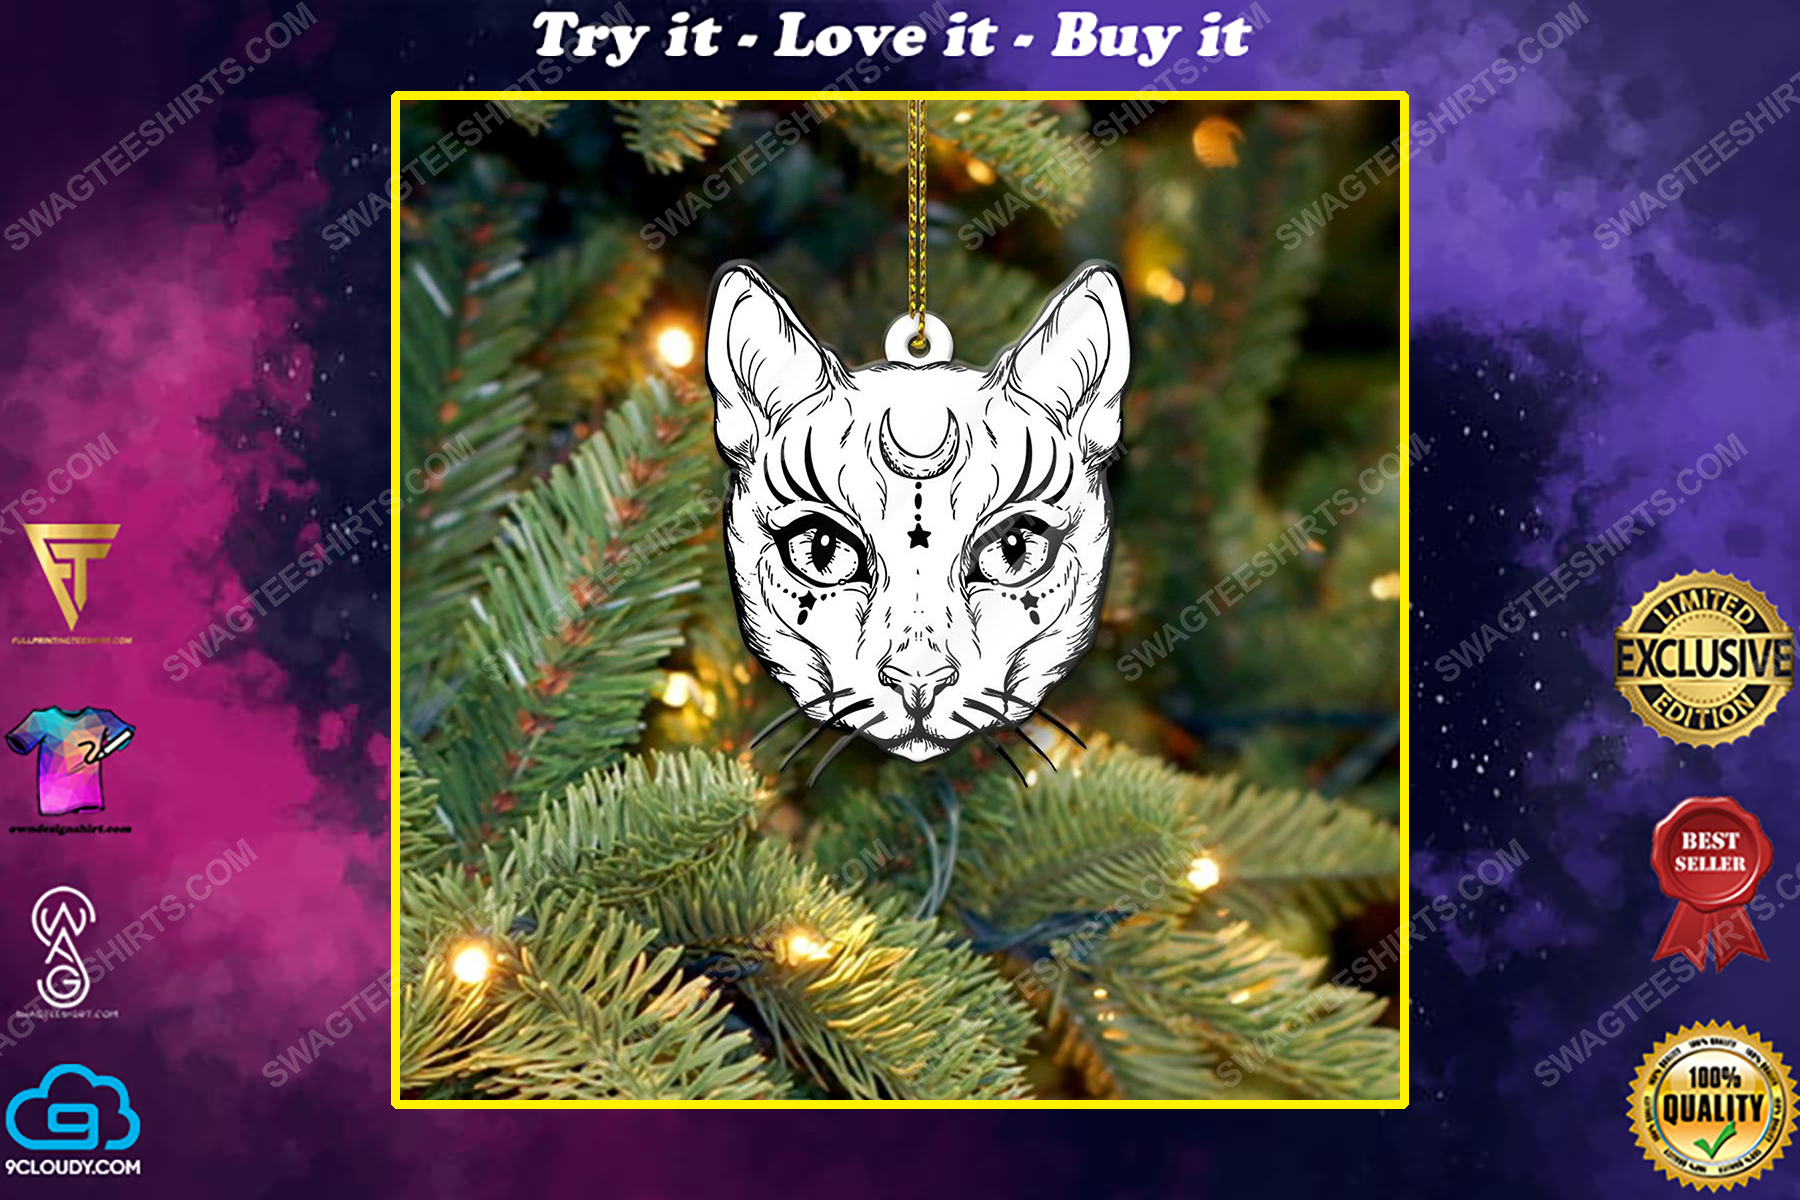 Pagan moon white cat christmas gift ornament